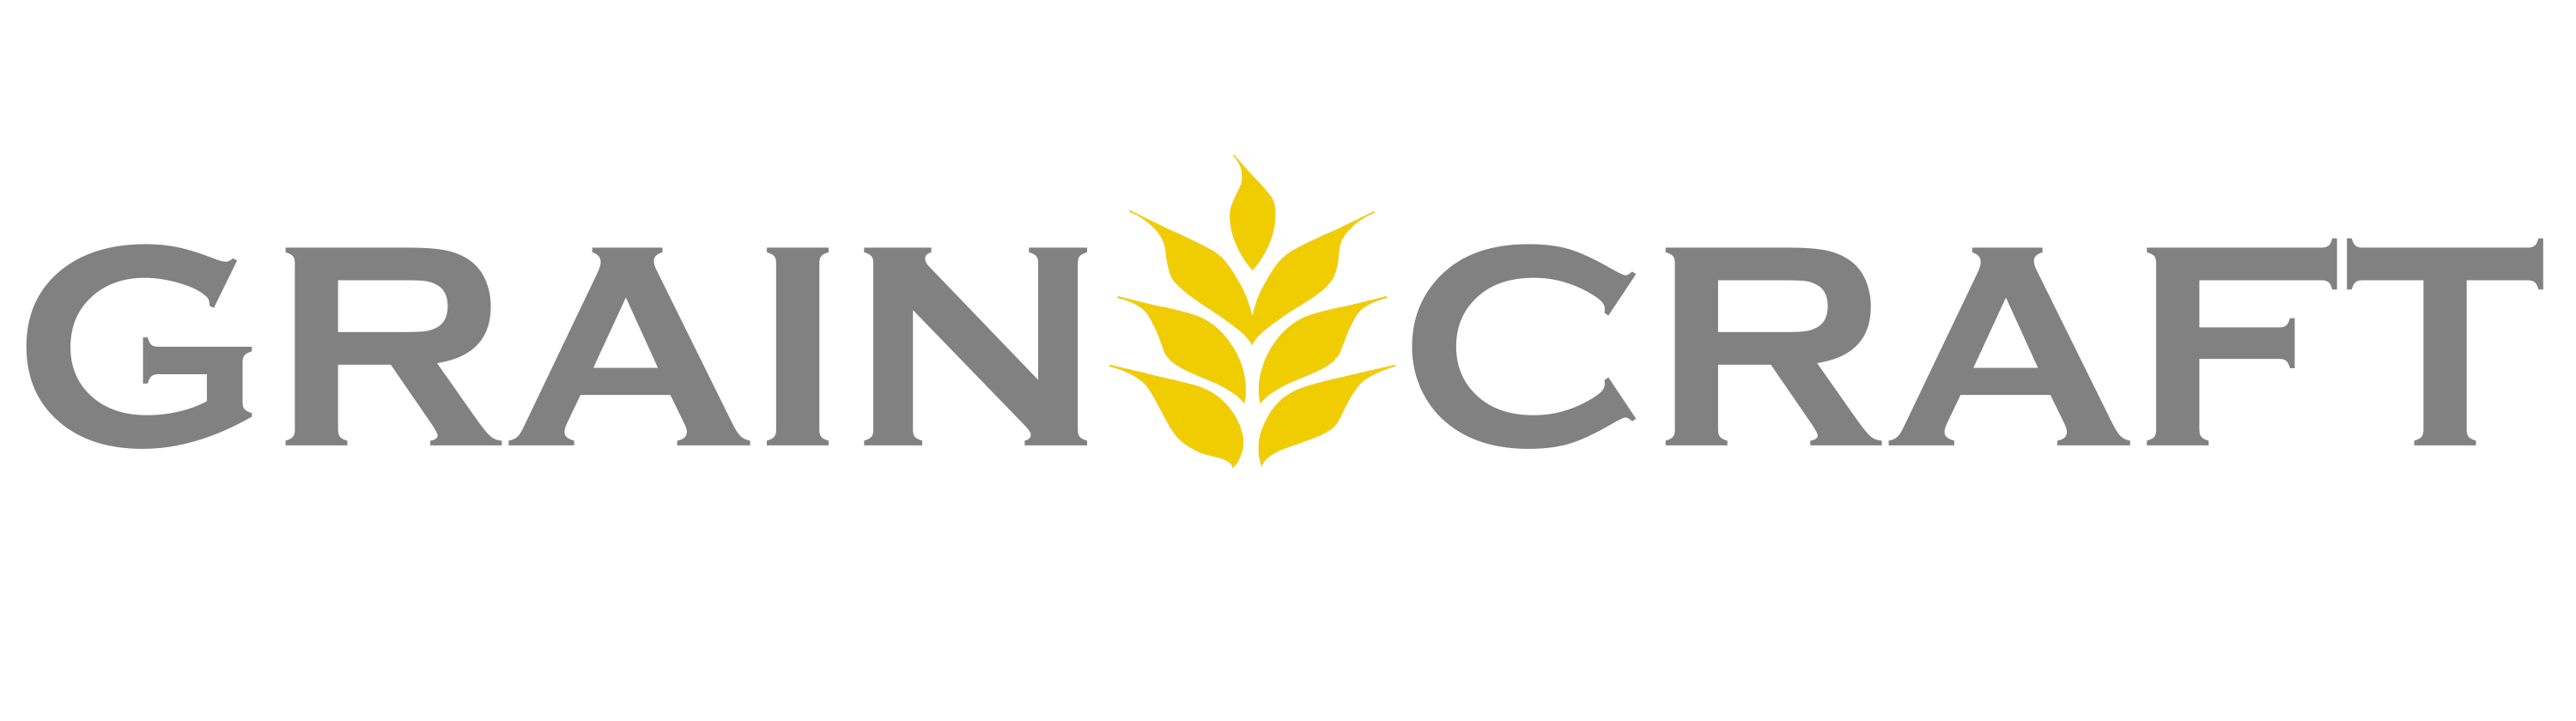 grain craft company logo